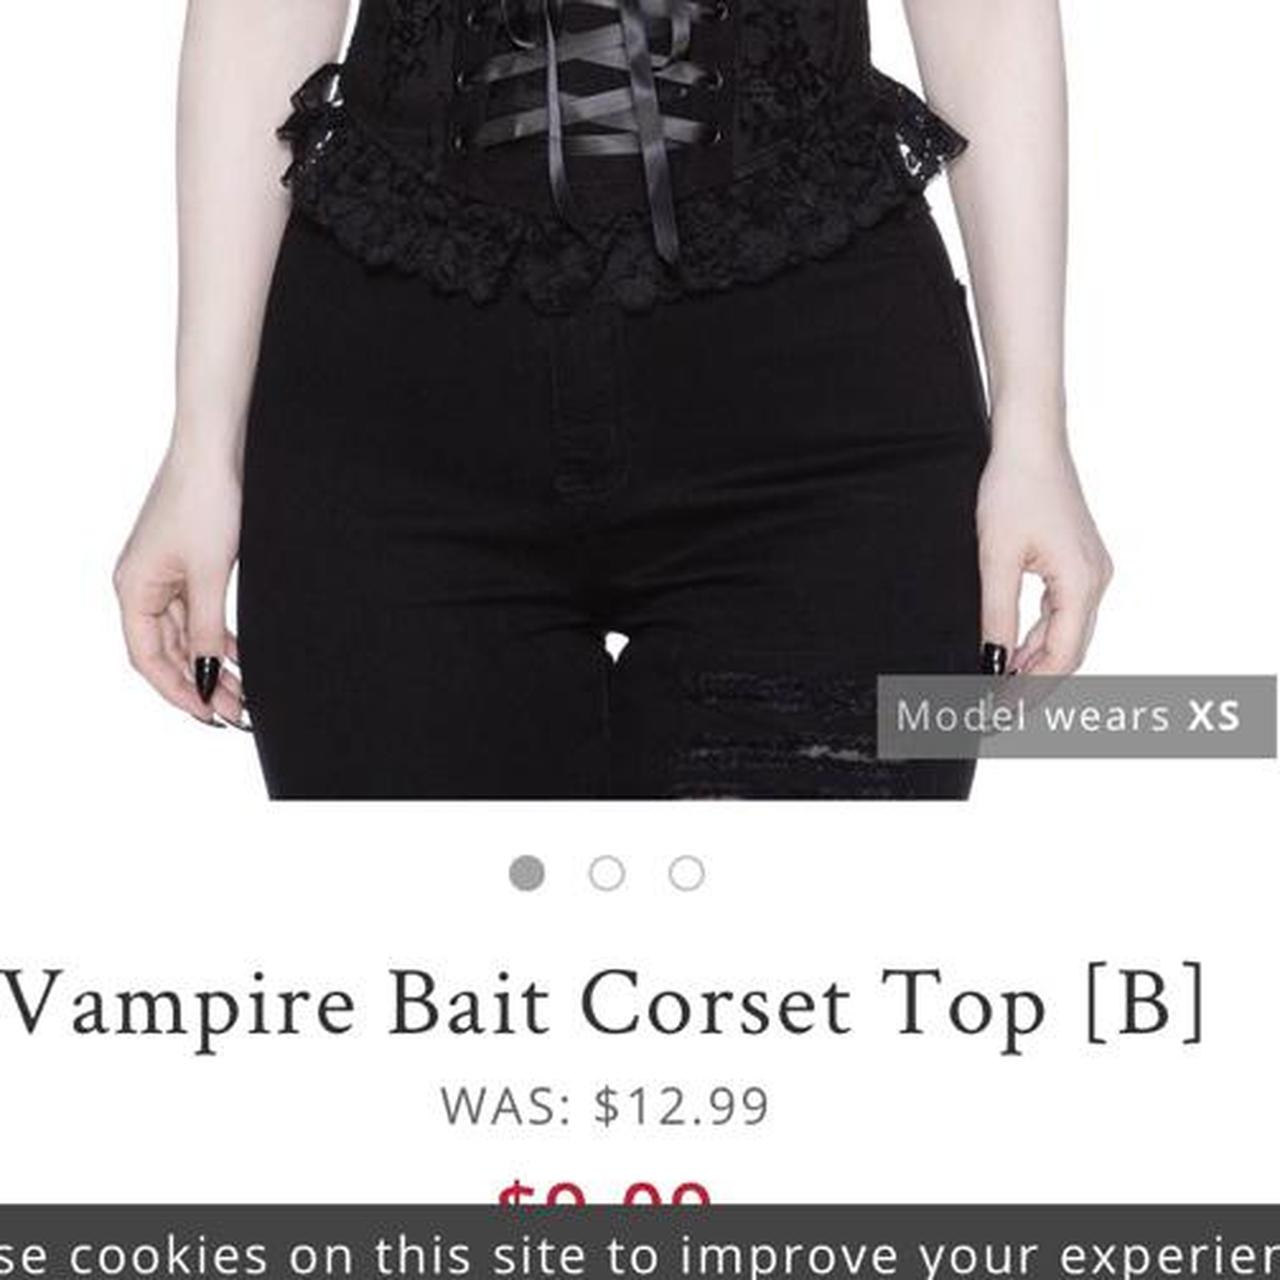 Loa House Store - Vampire Bait corset top Marca @killstar Talla: M ¢30,500  www.loahousecr.com #loahousestore #killstarcostarica #gothstyle  #authorizedretailer #compralocalcr #compraenlineacr #modaalternativacr  #goth